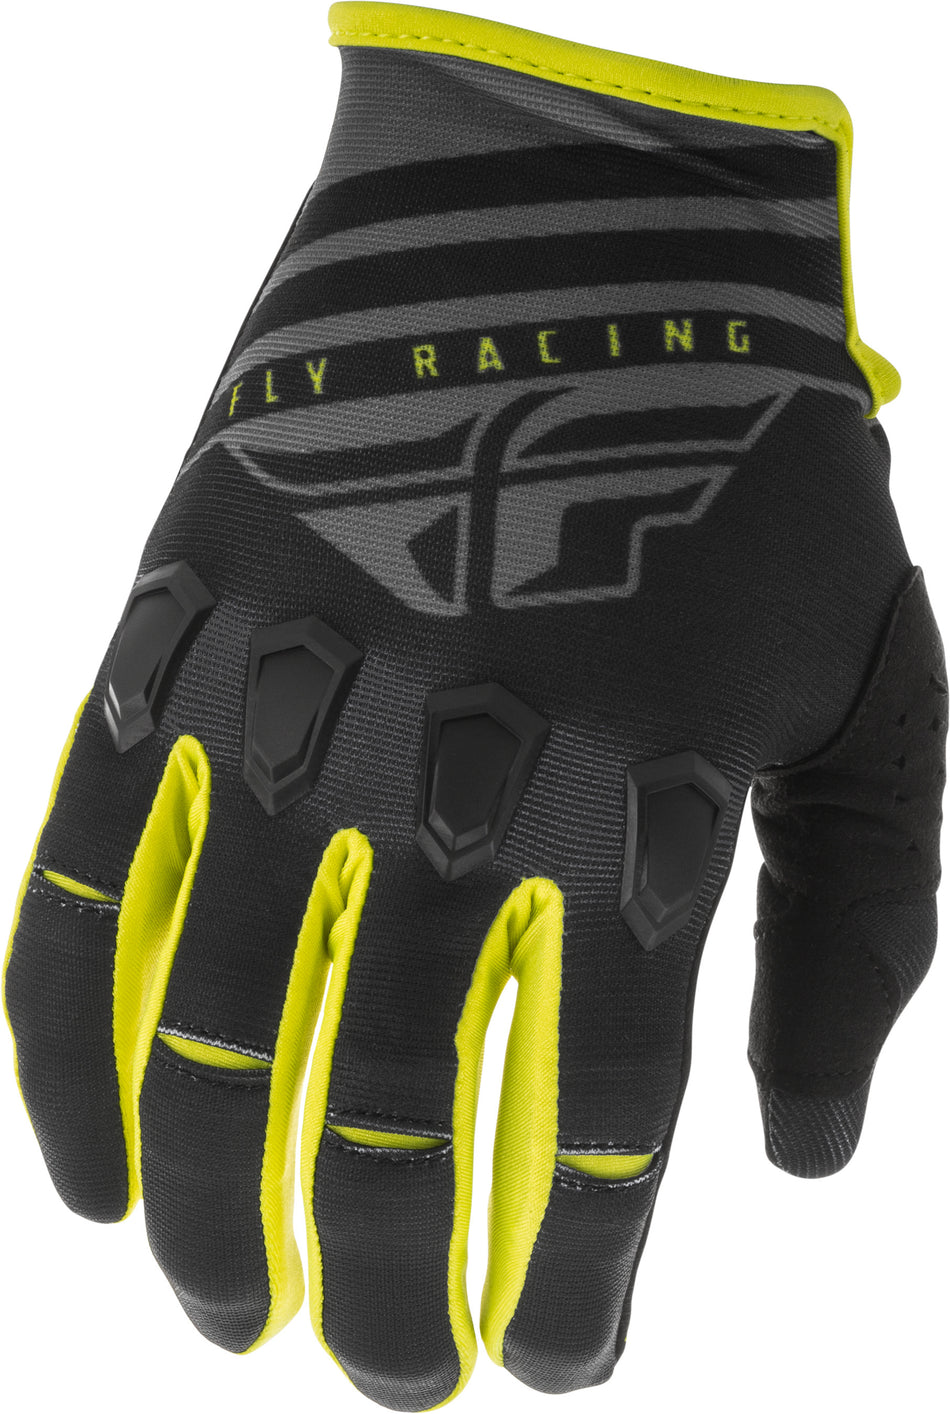 FLY RACING Kinetic K220 Gloves Black/Grey/Hi-Vis Sz 08 373-51508